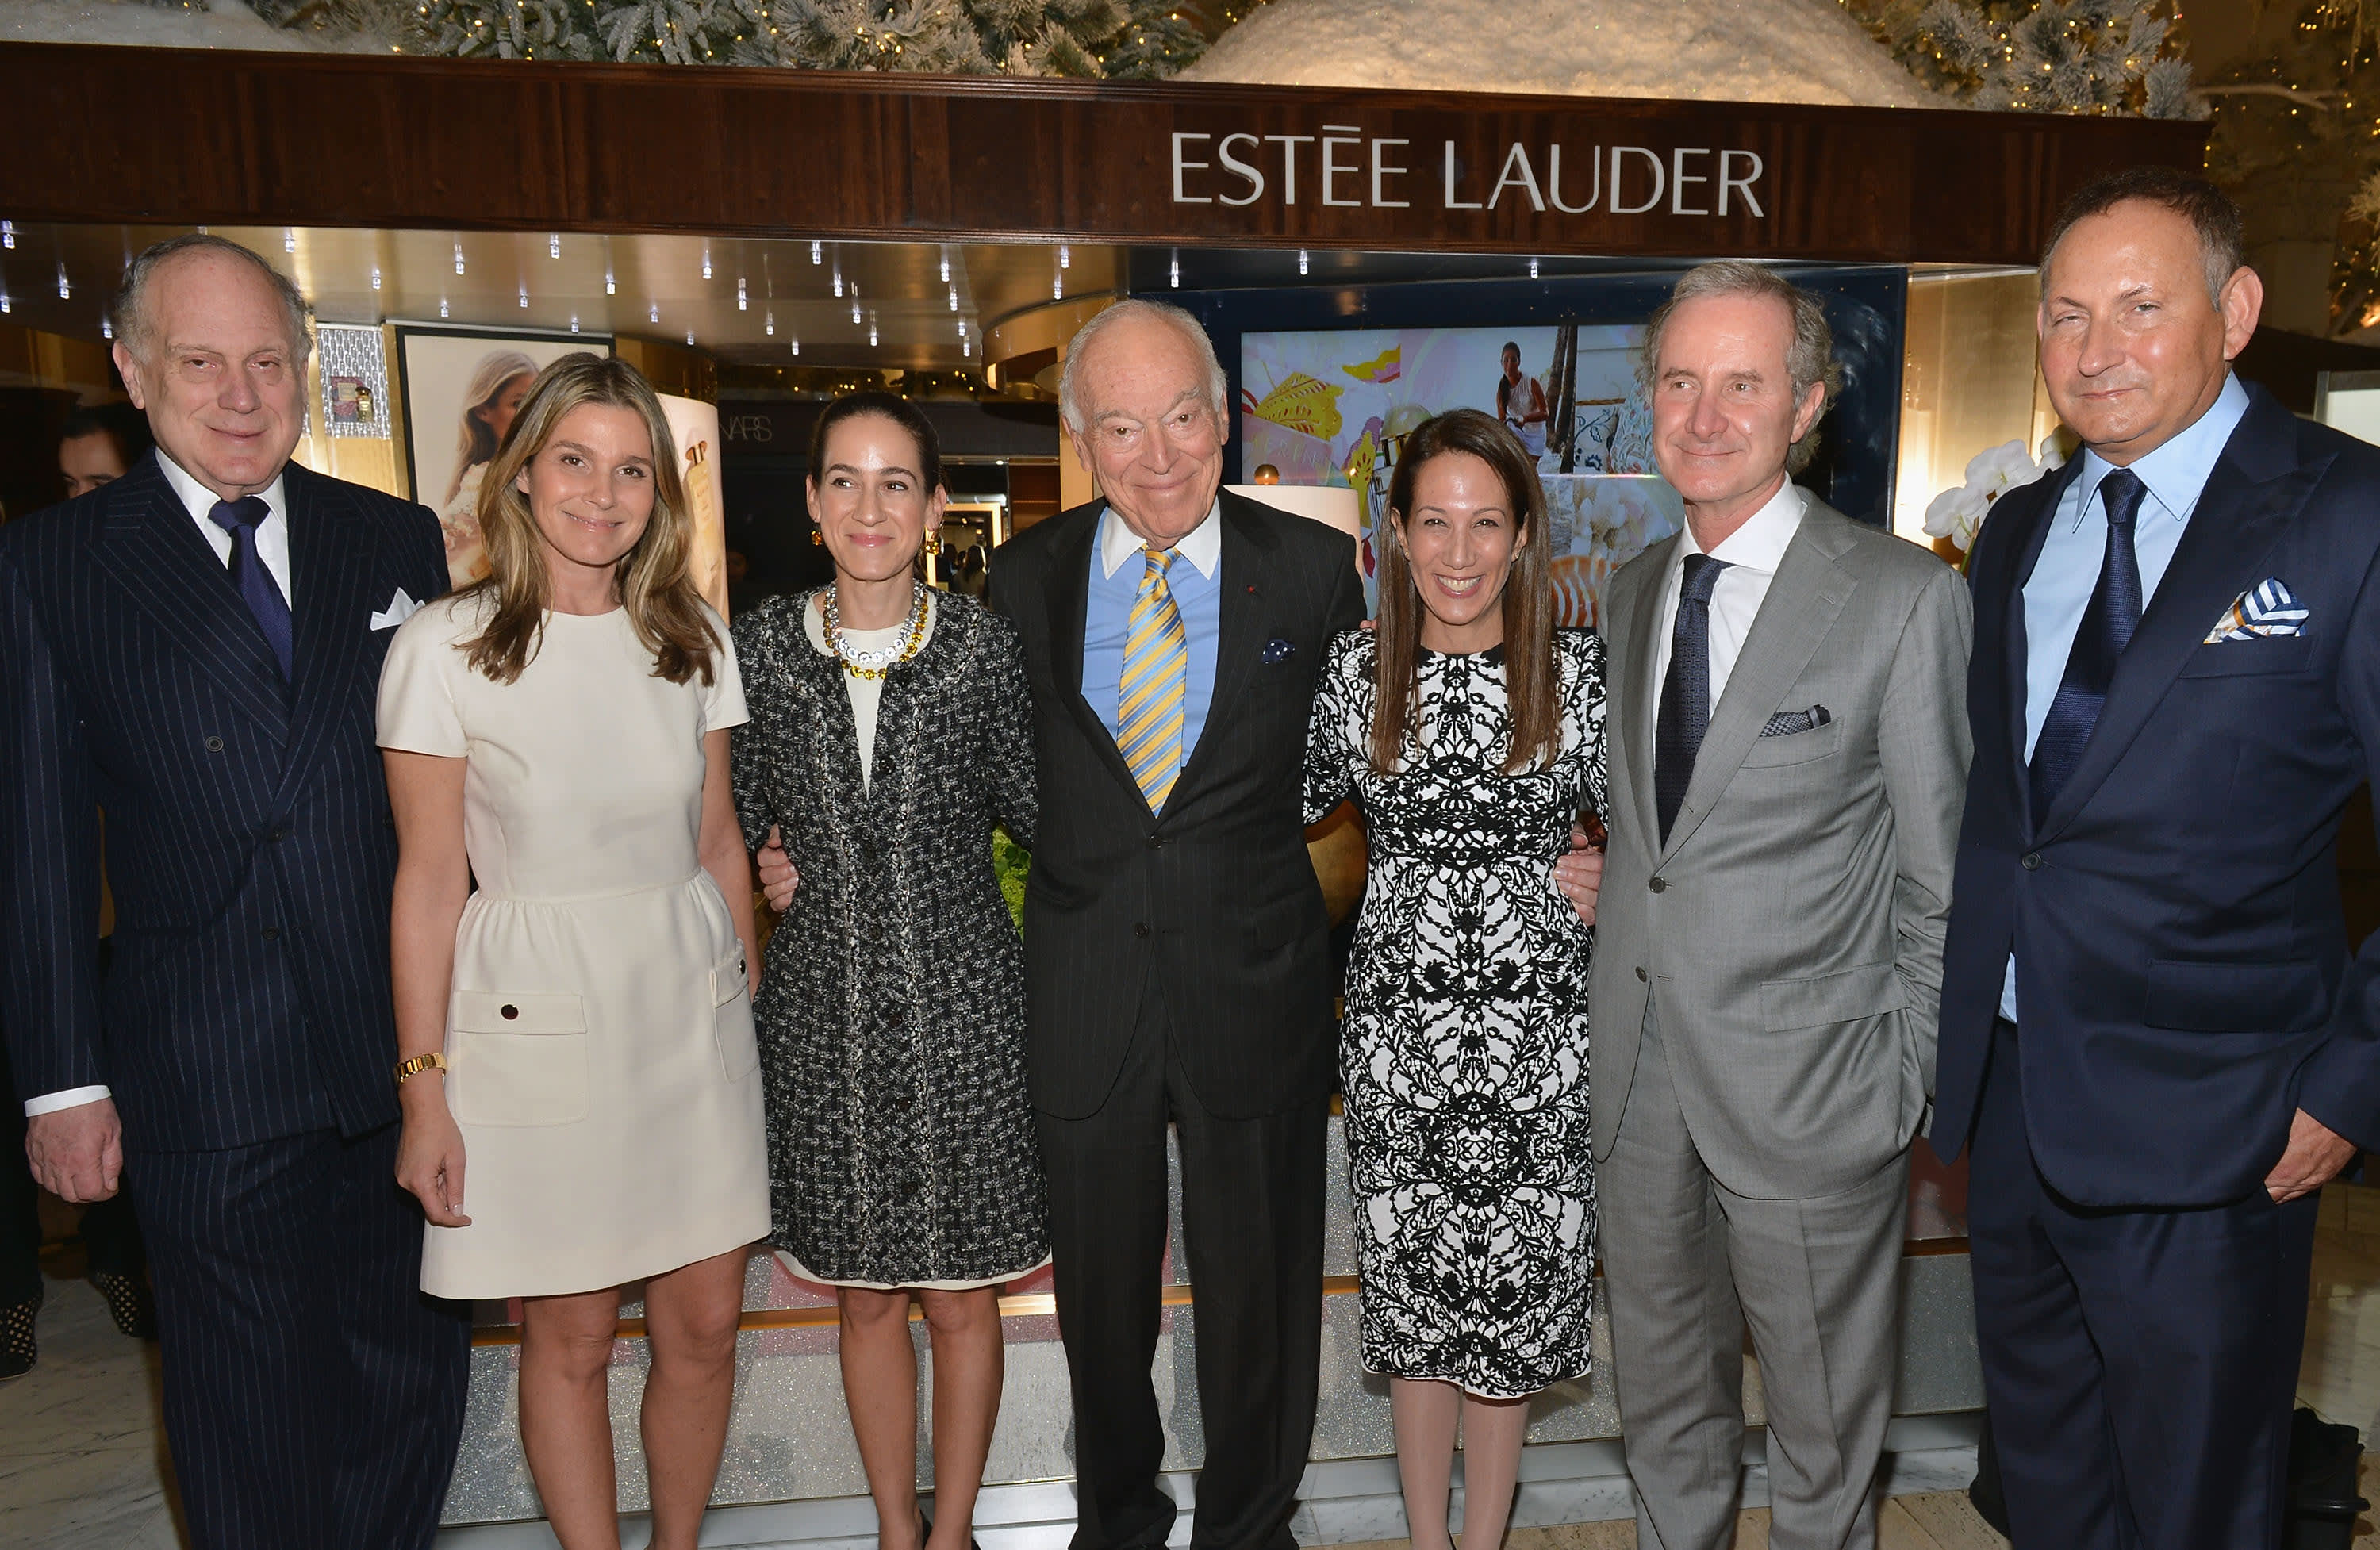 Estee Lauder Family Group